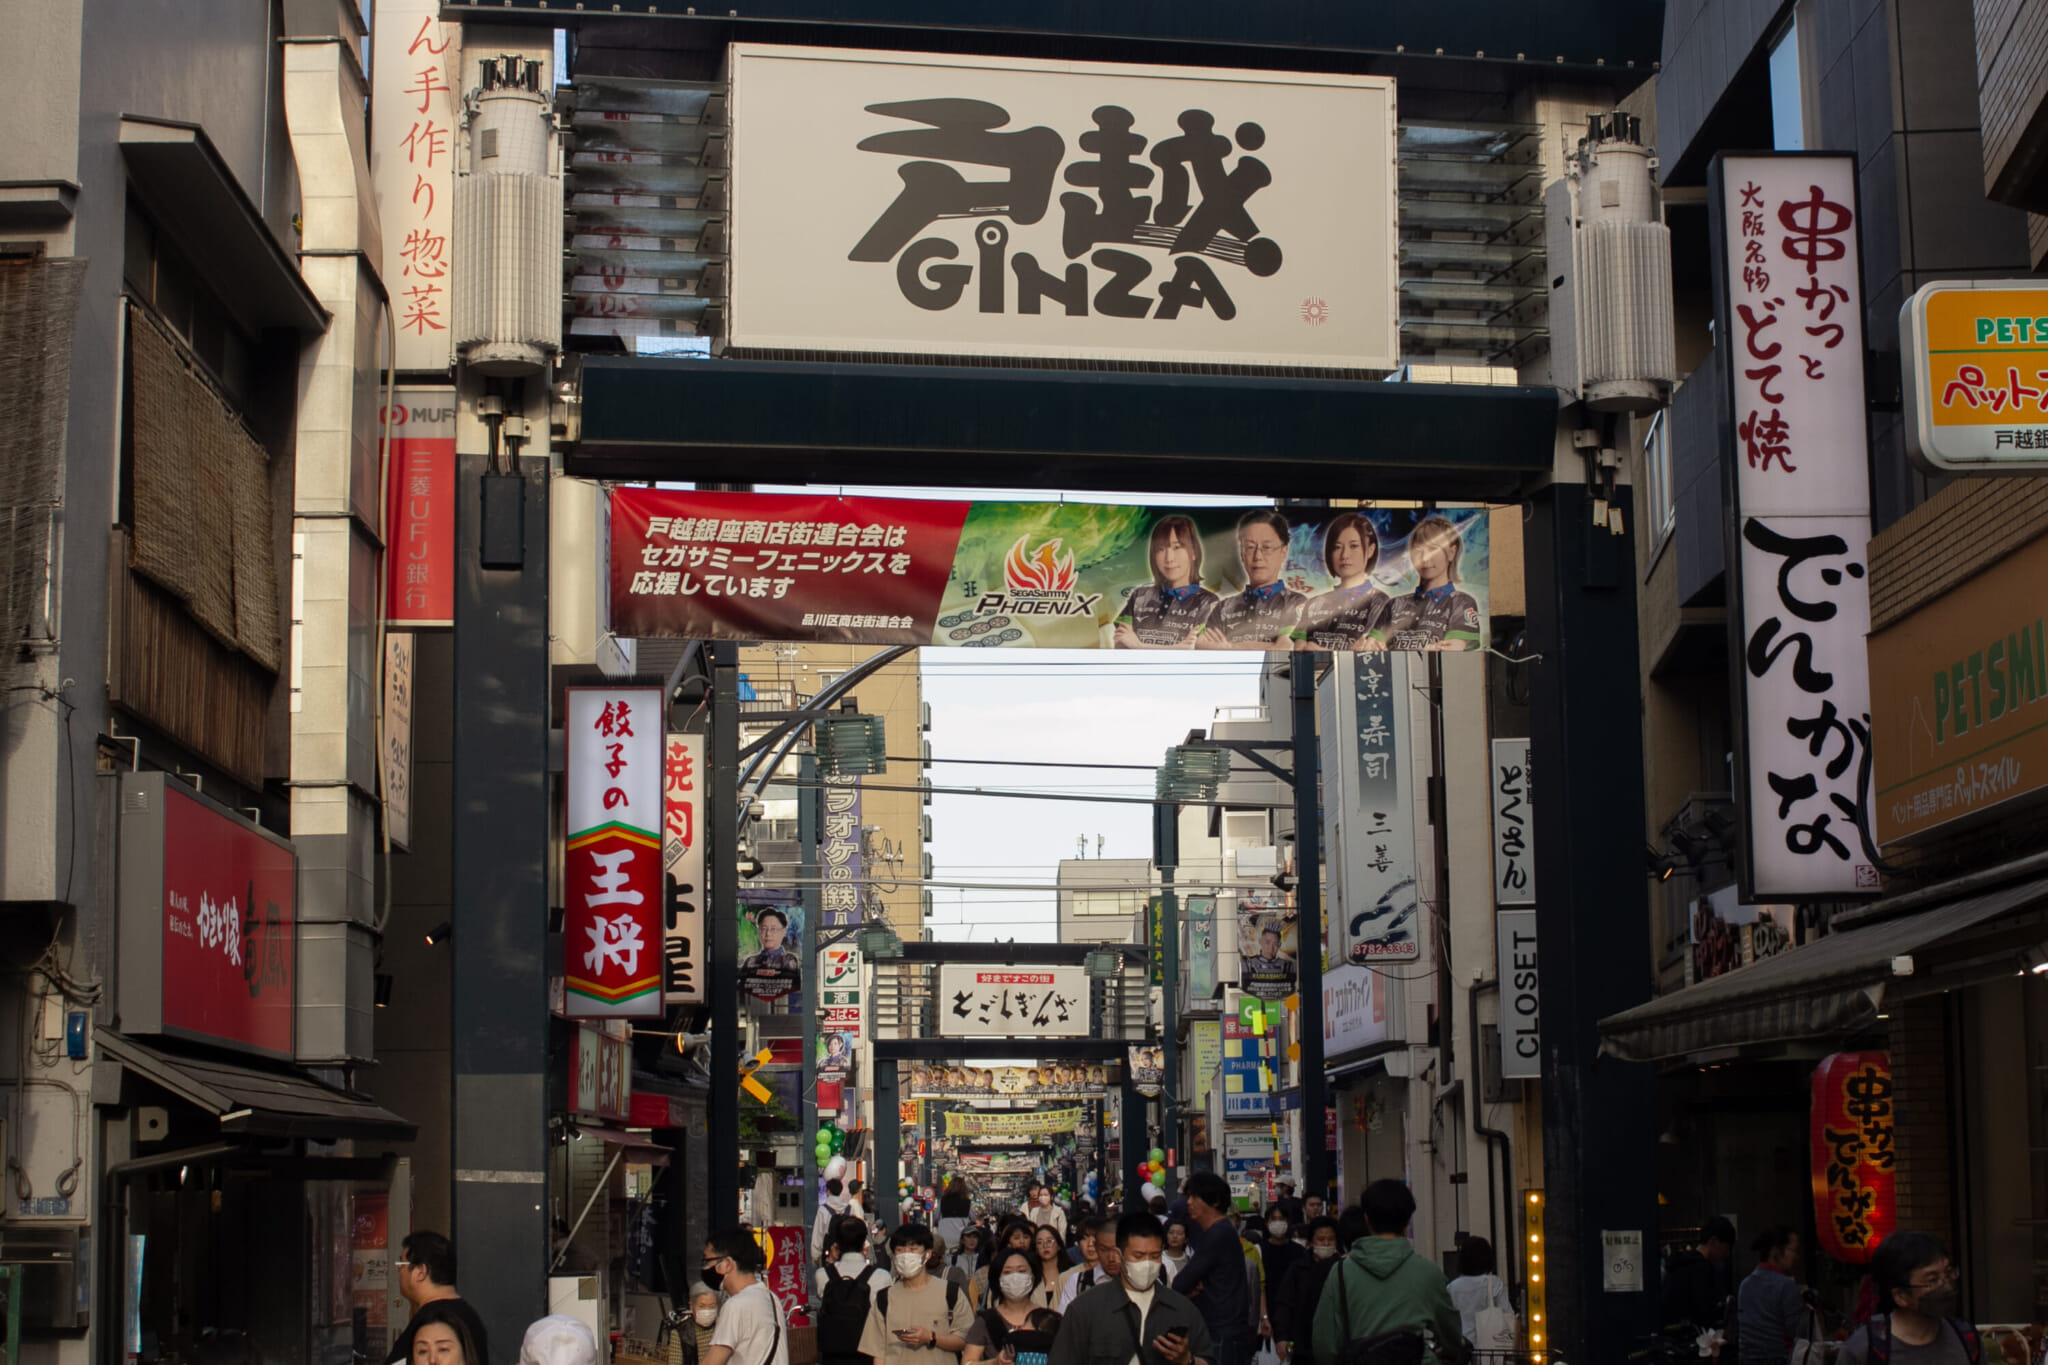 tokyo shopping street togashi ginza